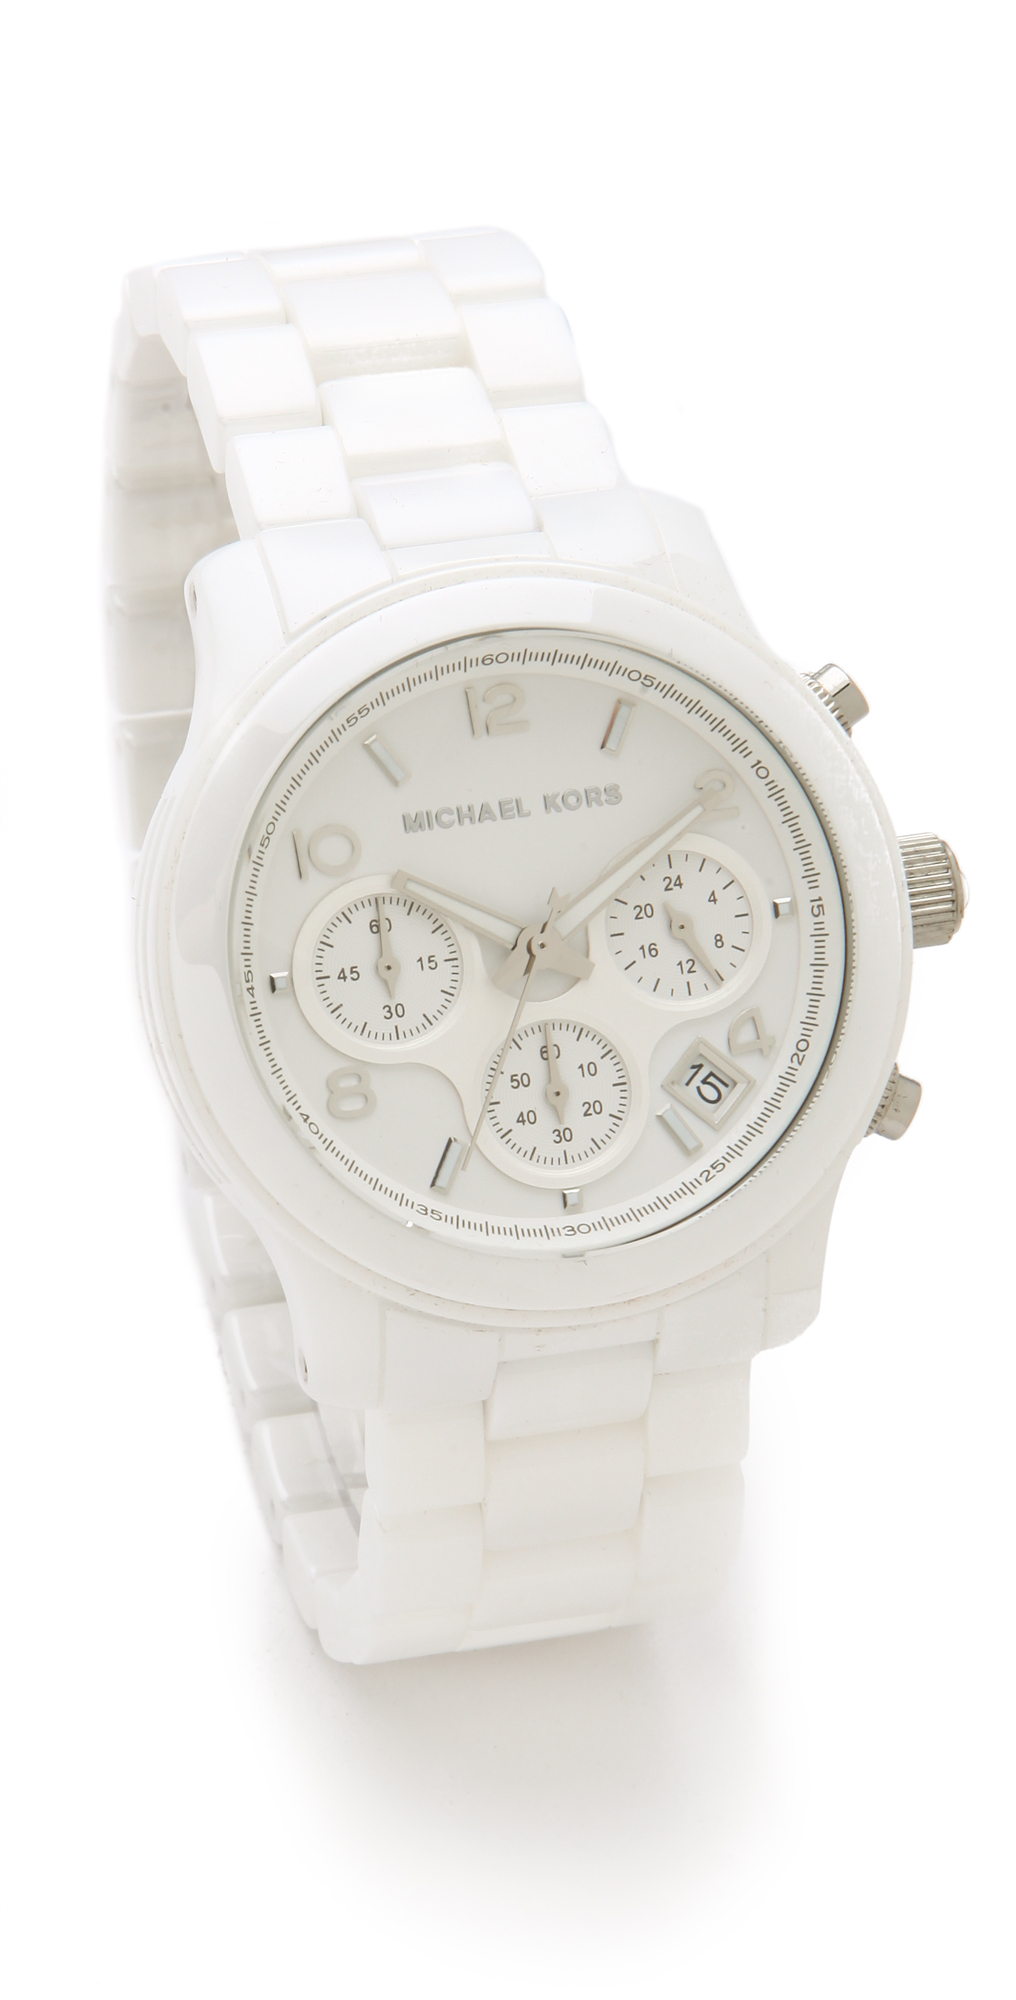 Lyst - Michael Kors Ceramic Watch in White